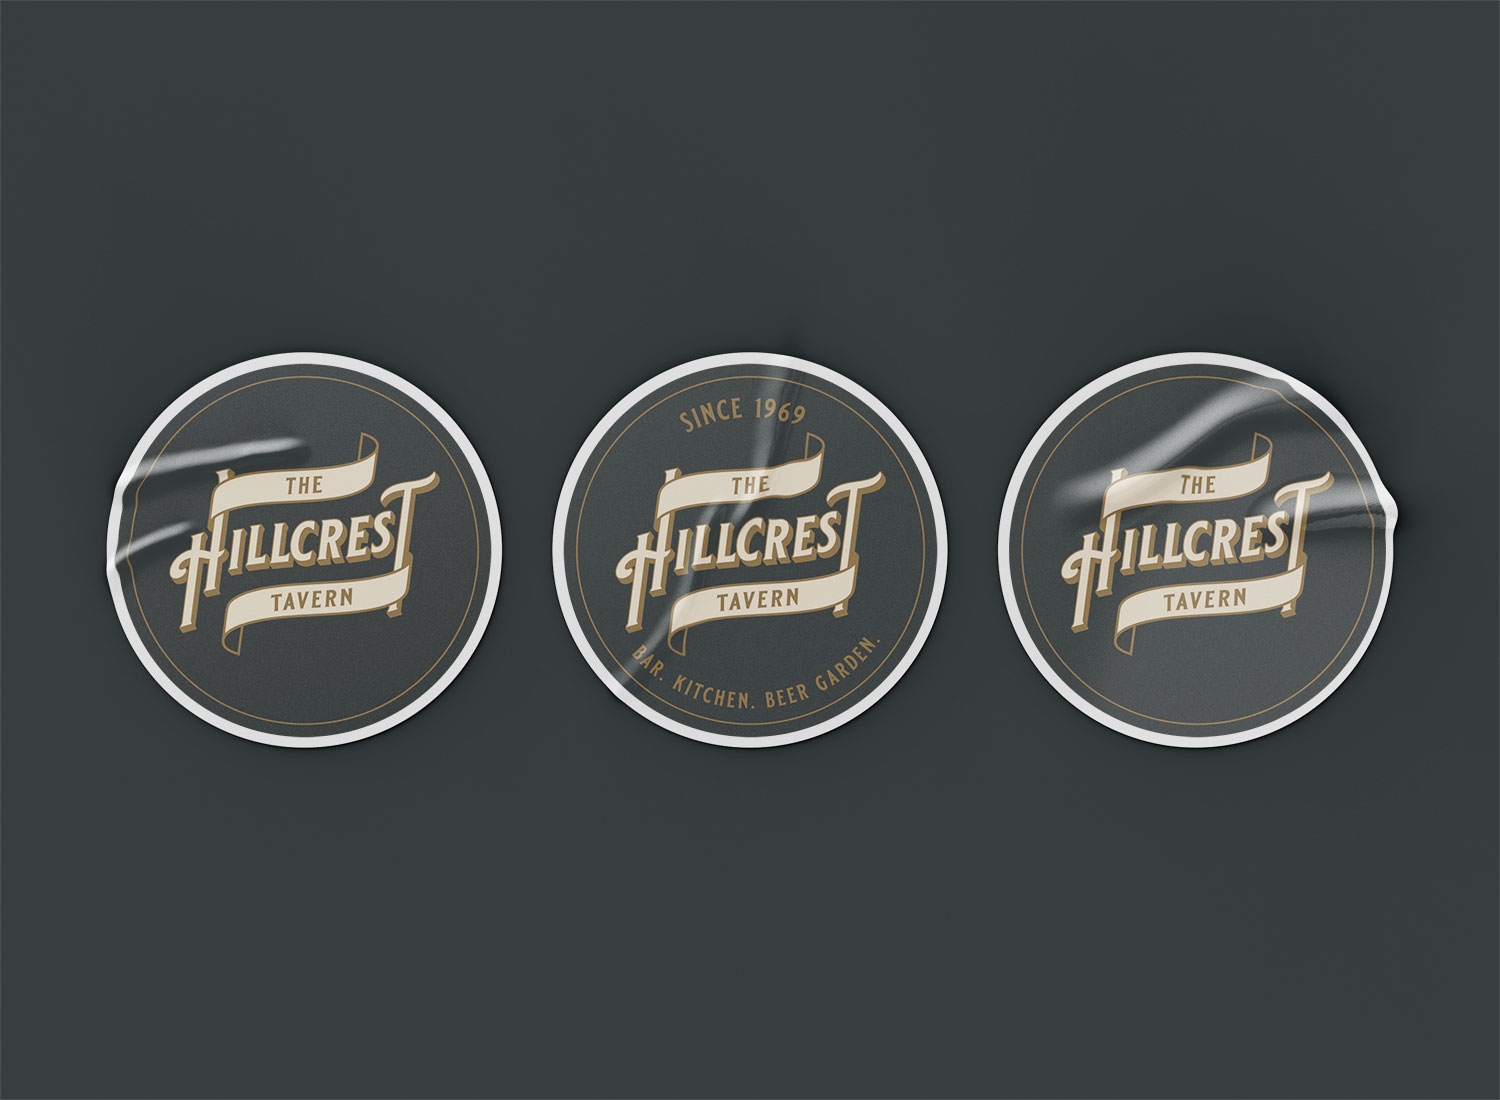 The Hillcrest Tavern logo design